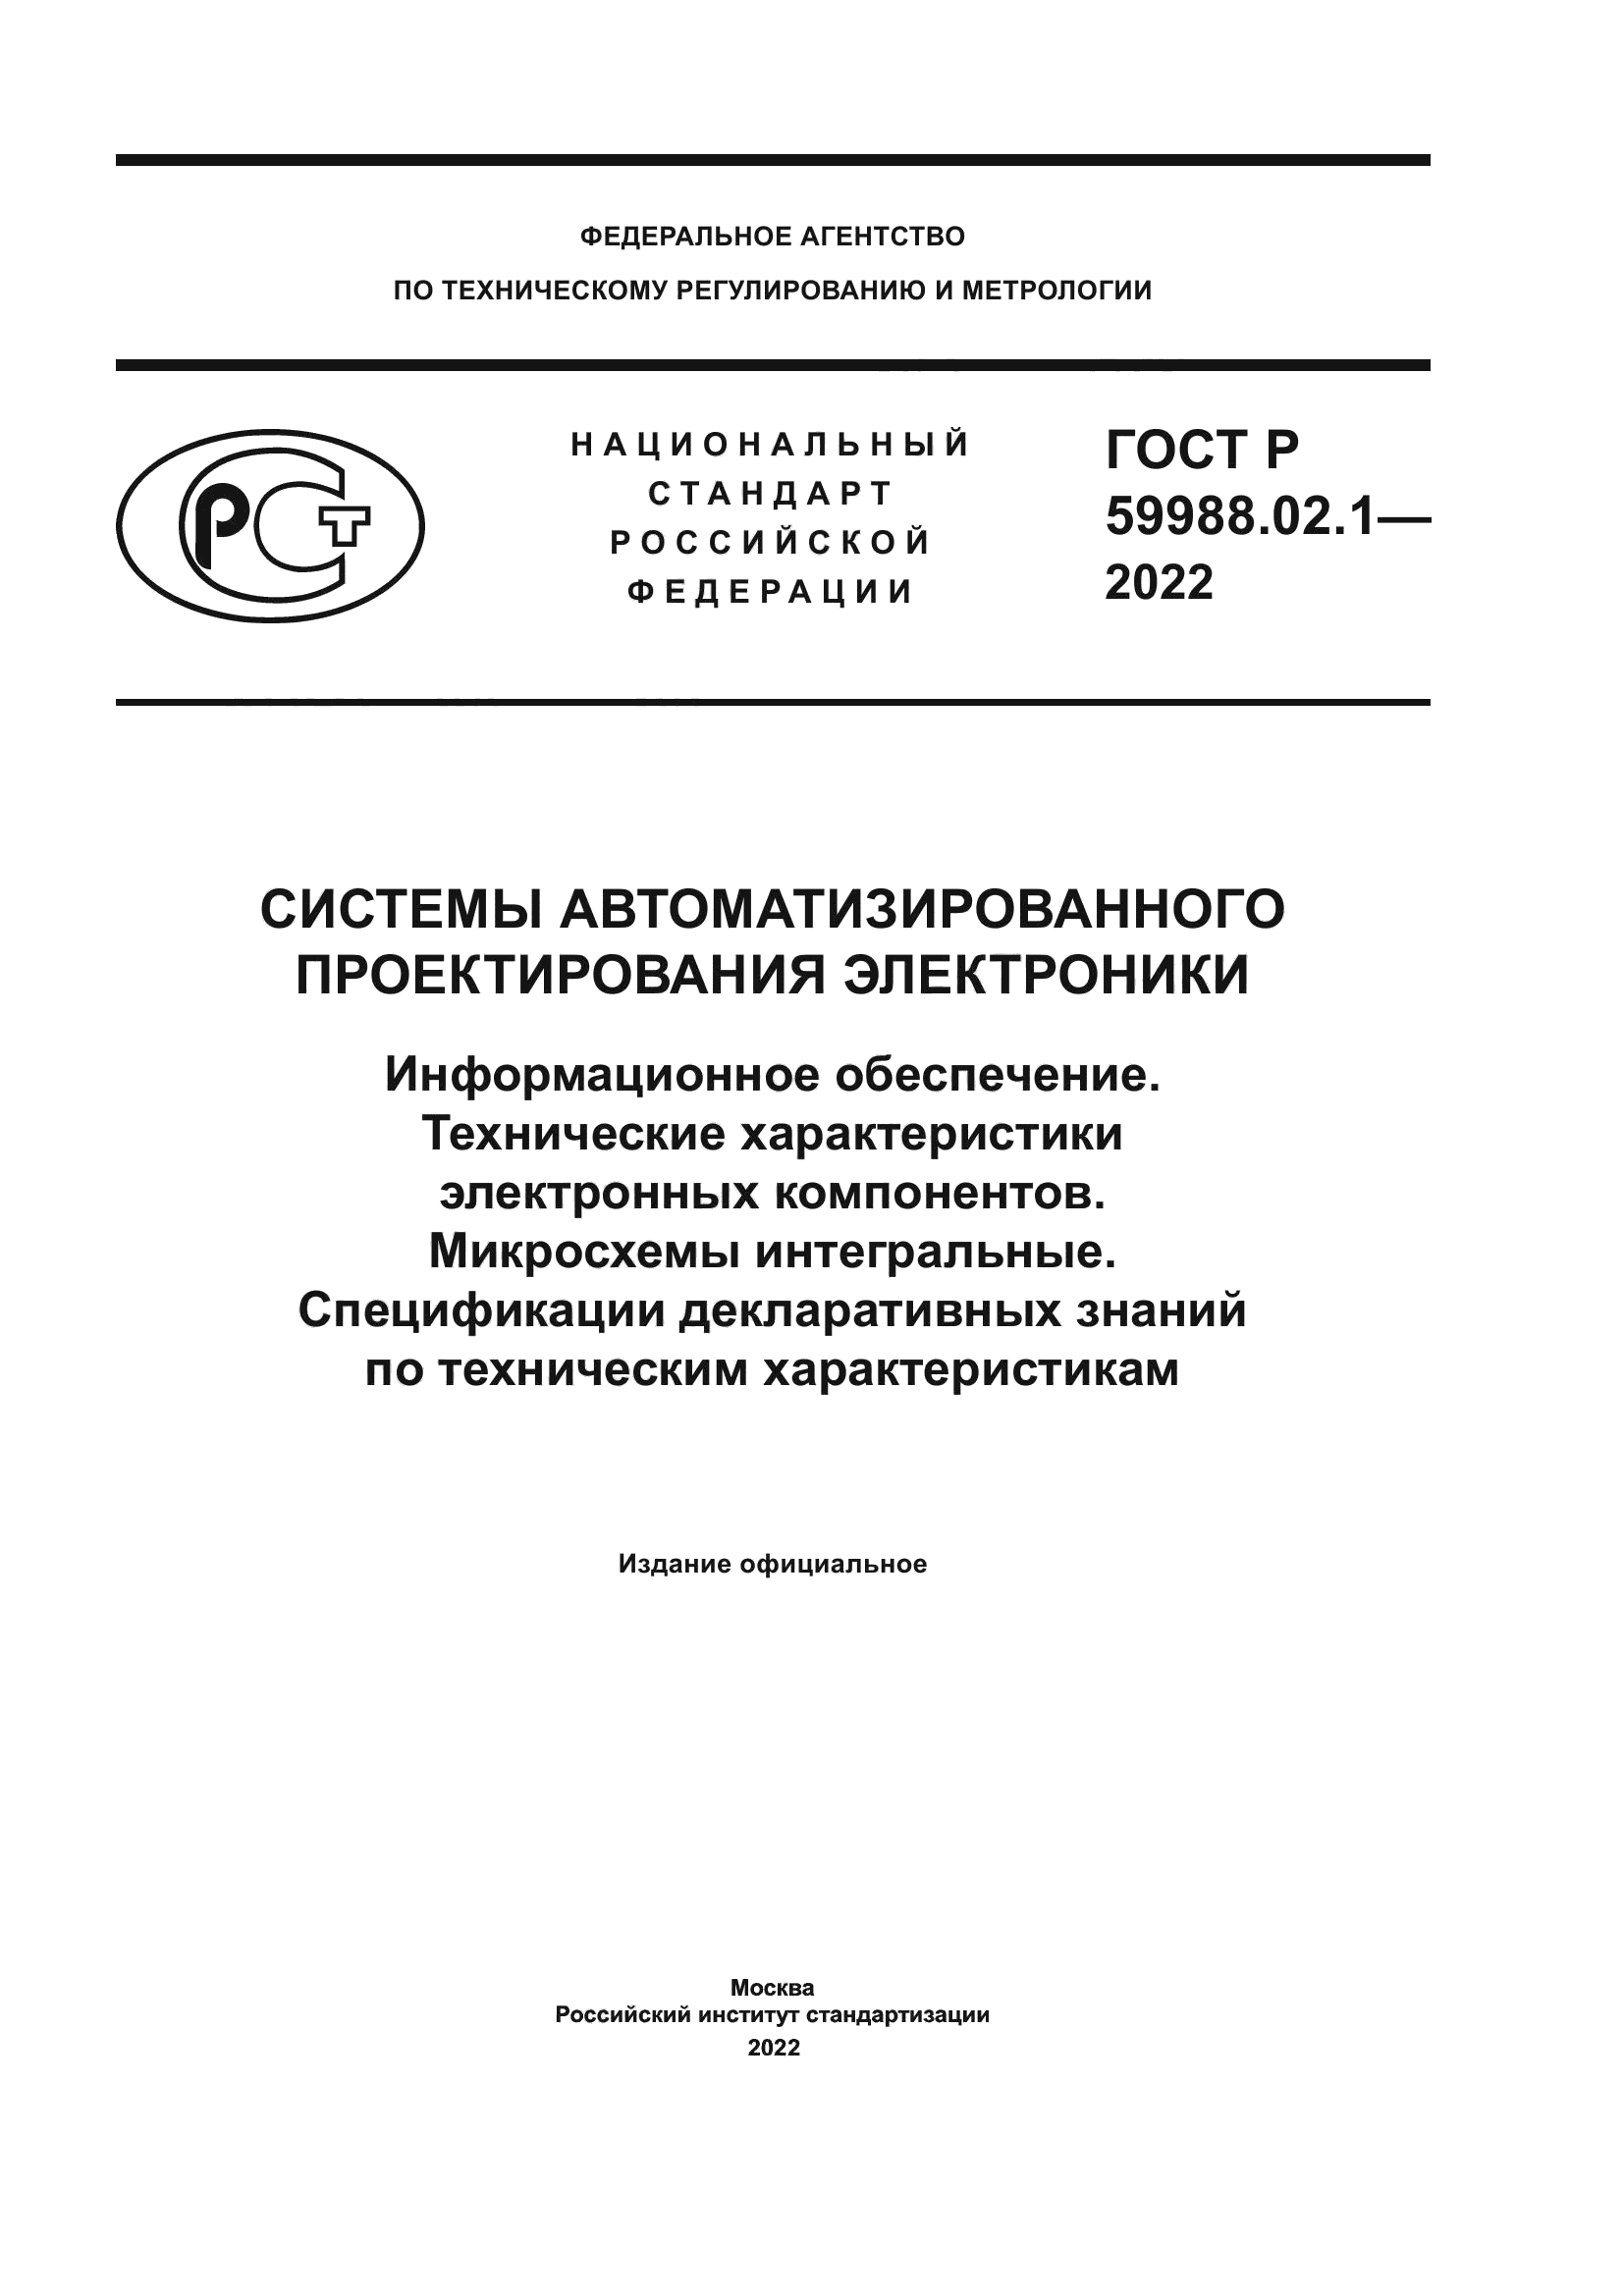 ГОСТ Р 59988.02.1-2022